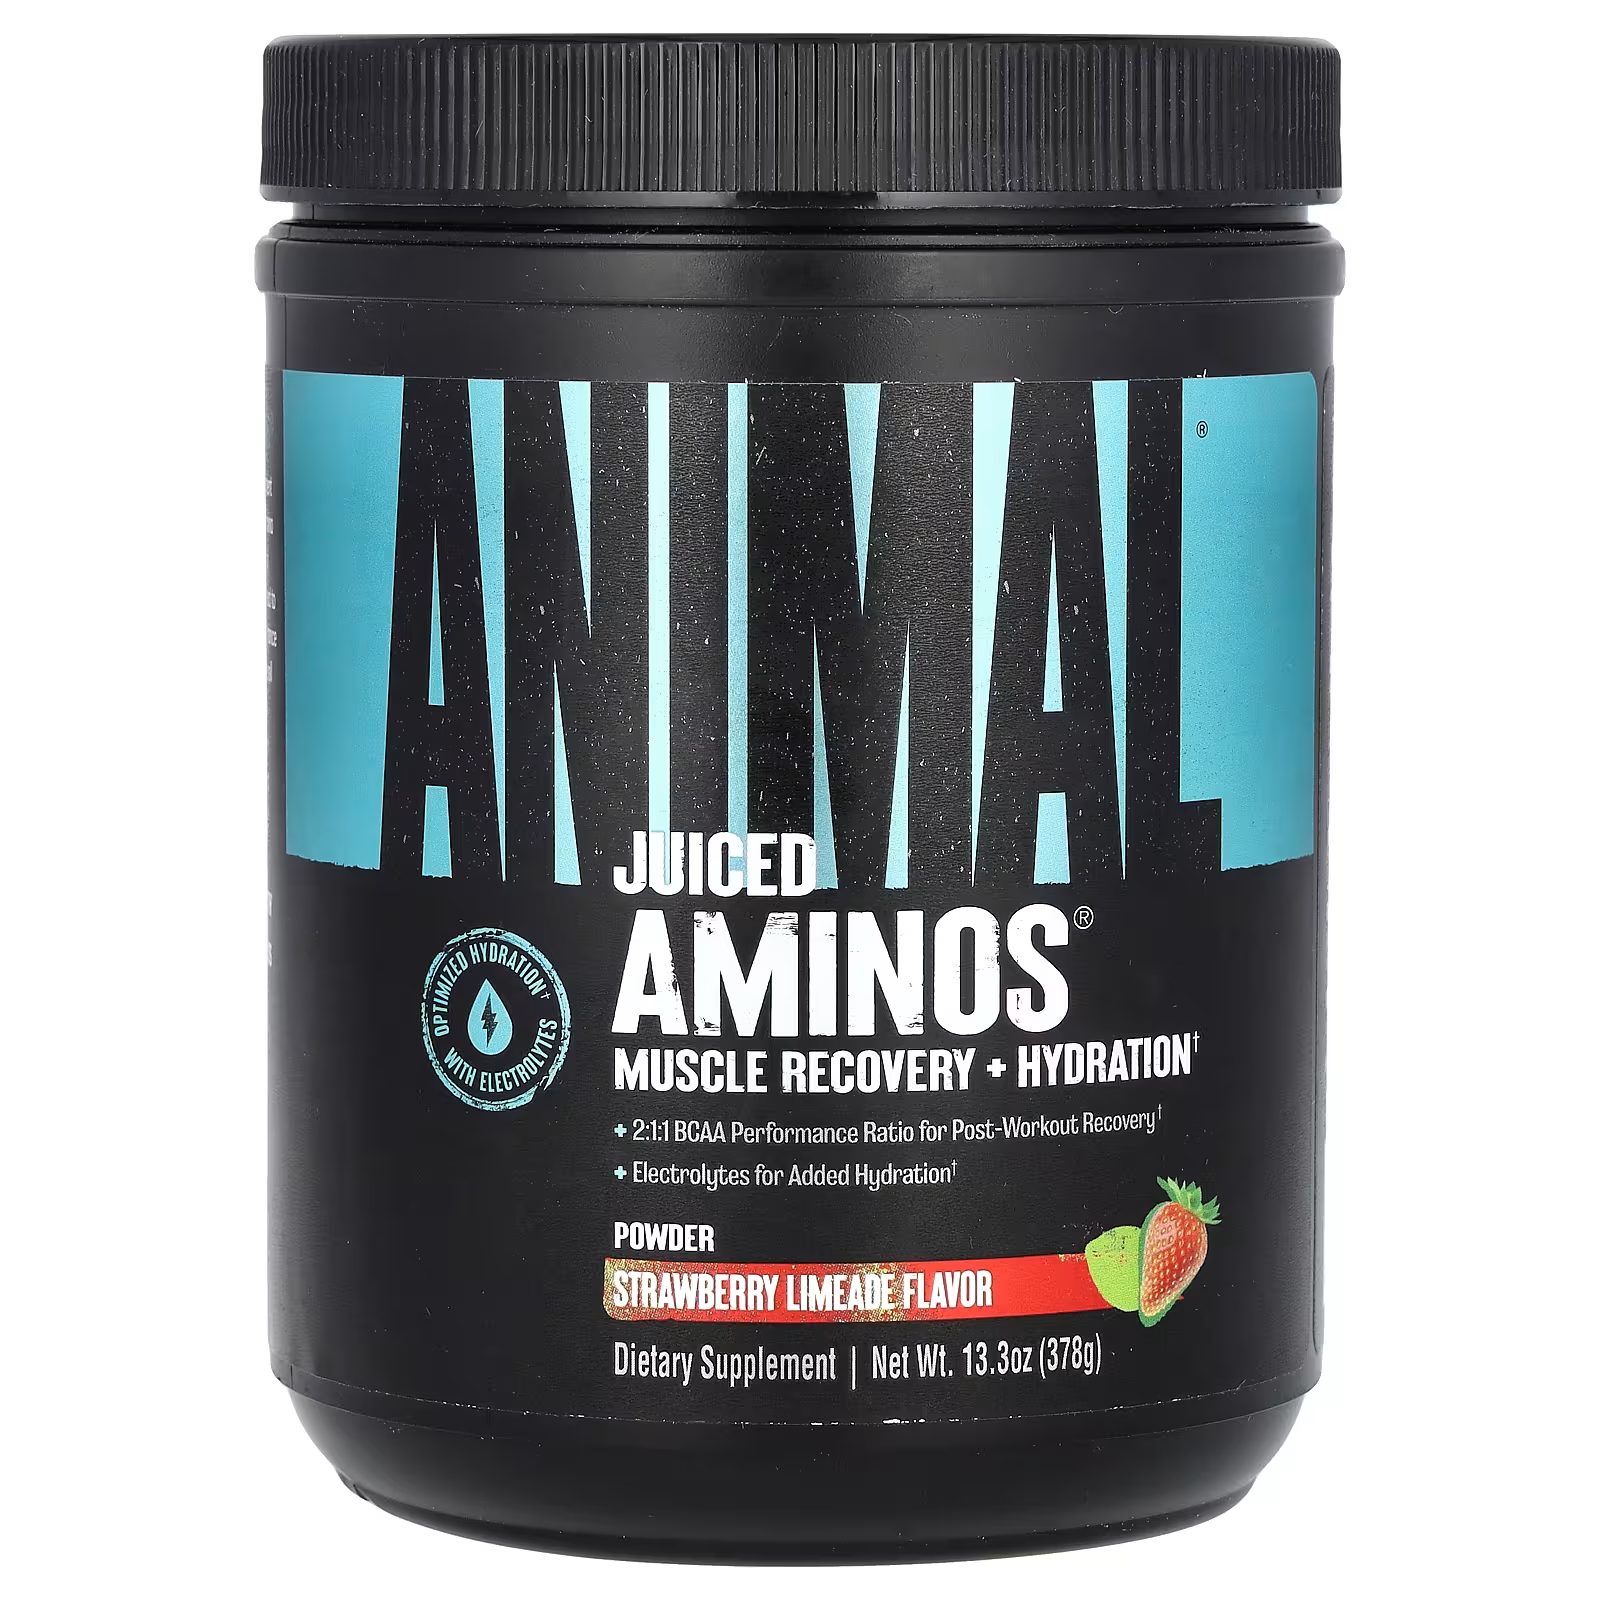 Пищевая добавка Animal Juiced Aminos клубника и лайм, 378 г universal nutrition animal juiced aminos клубничный лаймад 366 г 12 9 унции